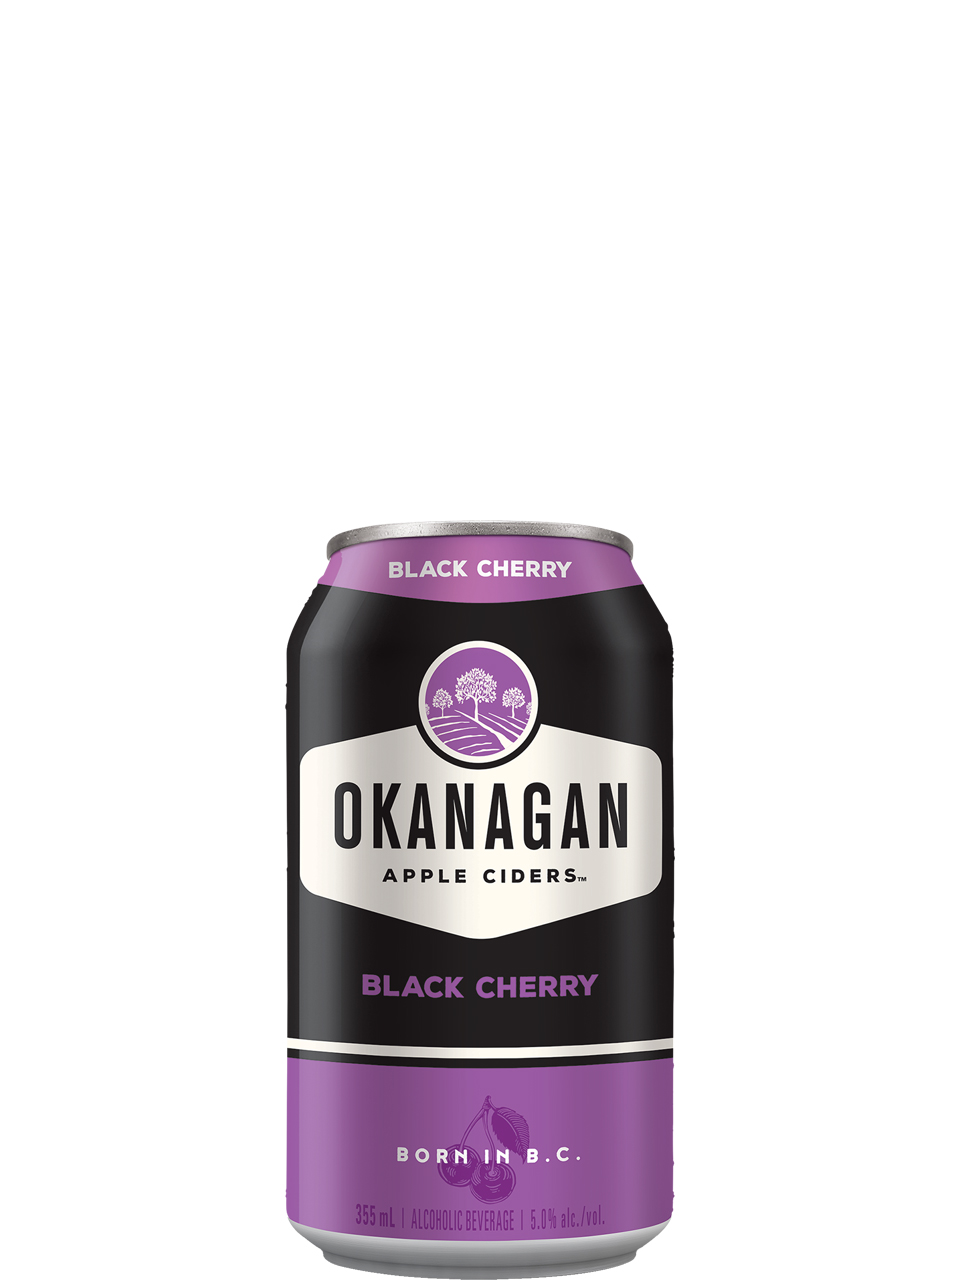 Okanagan Black Cherry Cider 6 Pack Cans